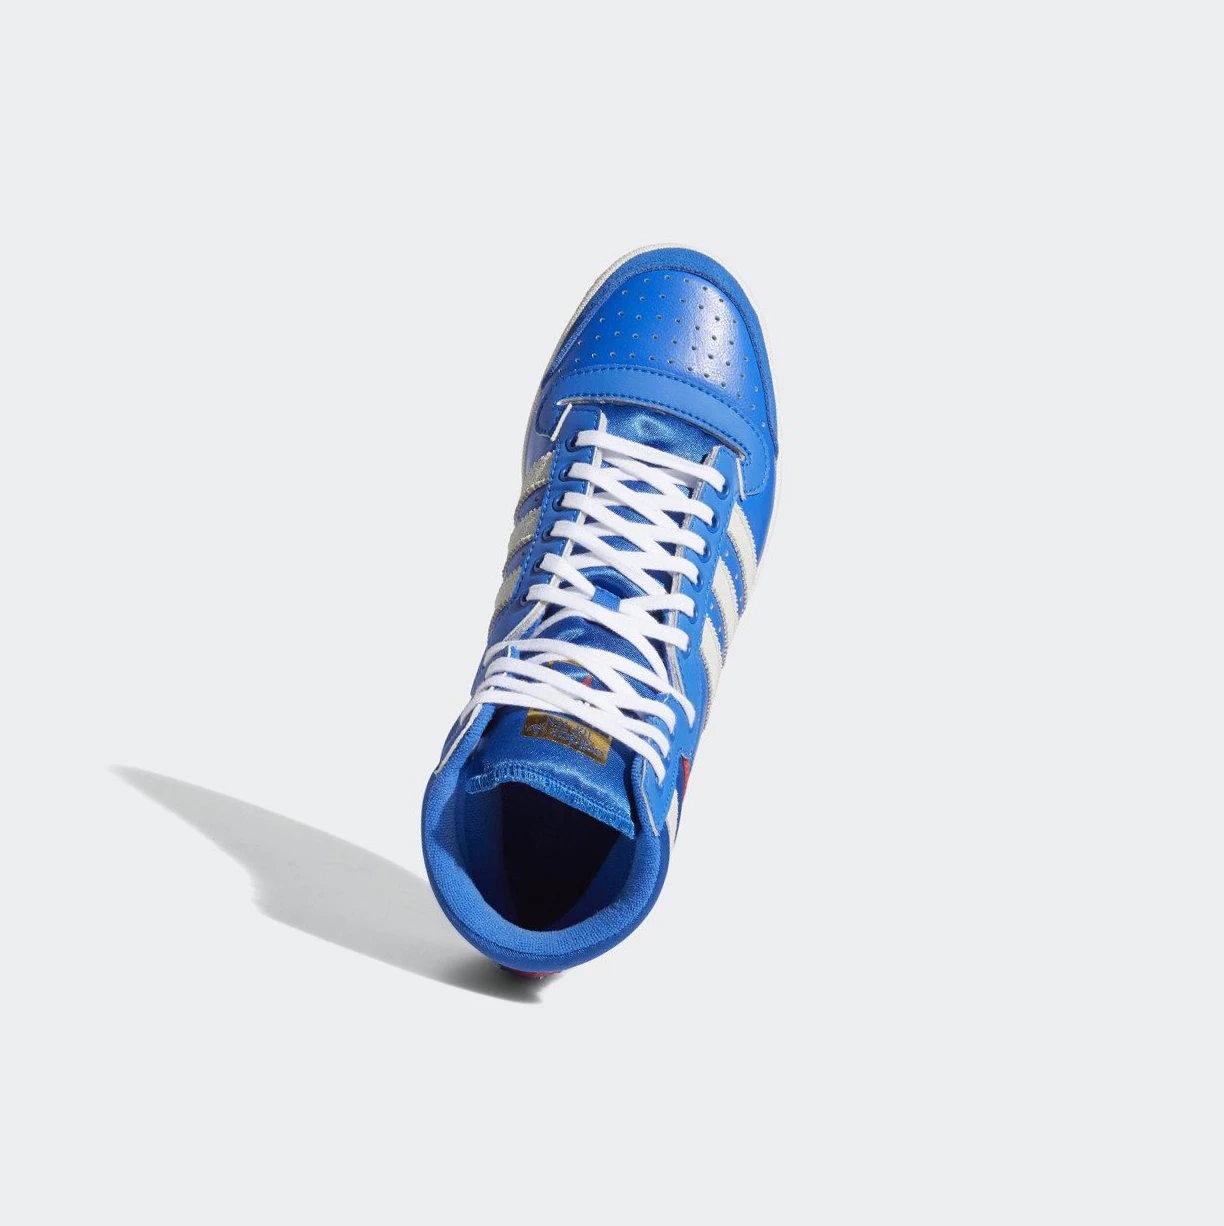 Originálne Topánky Adidas Top Ten Hi Damske Modre | 952SKPQMKVW